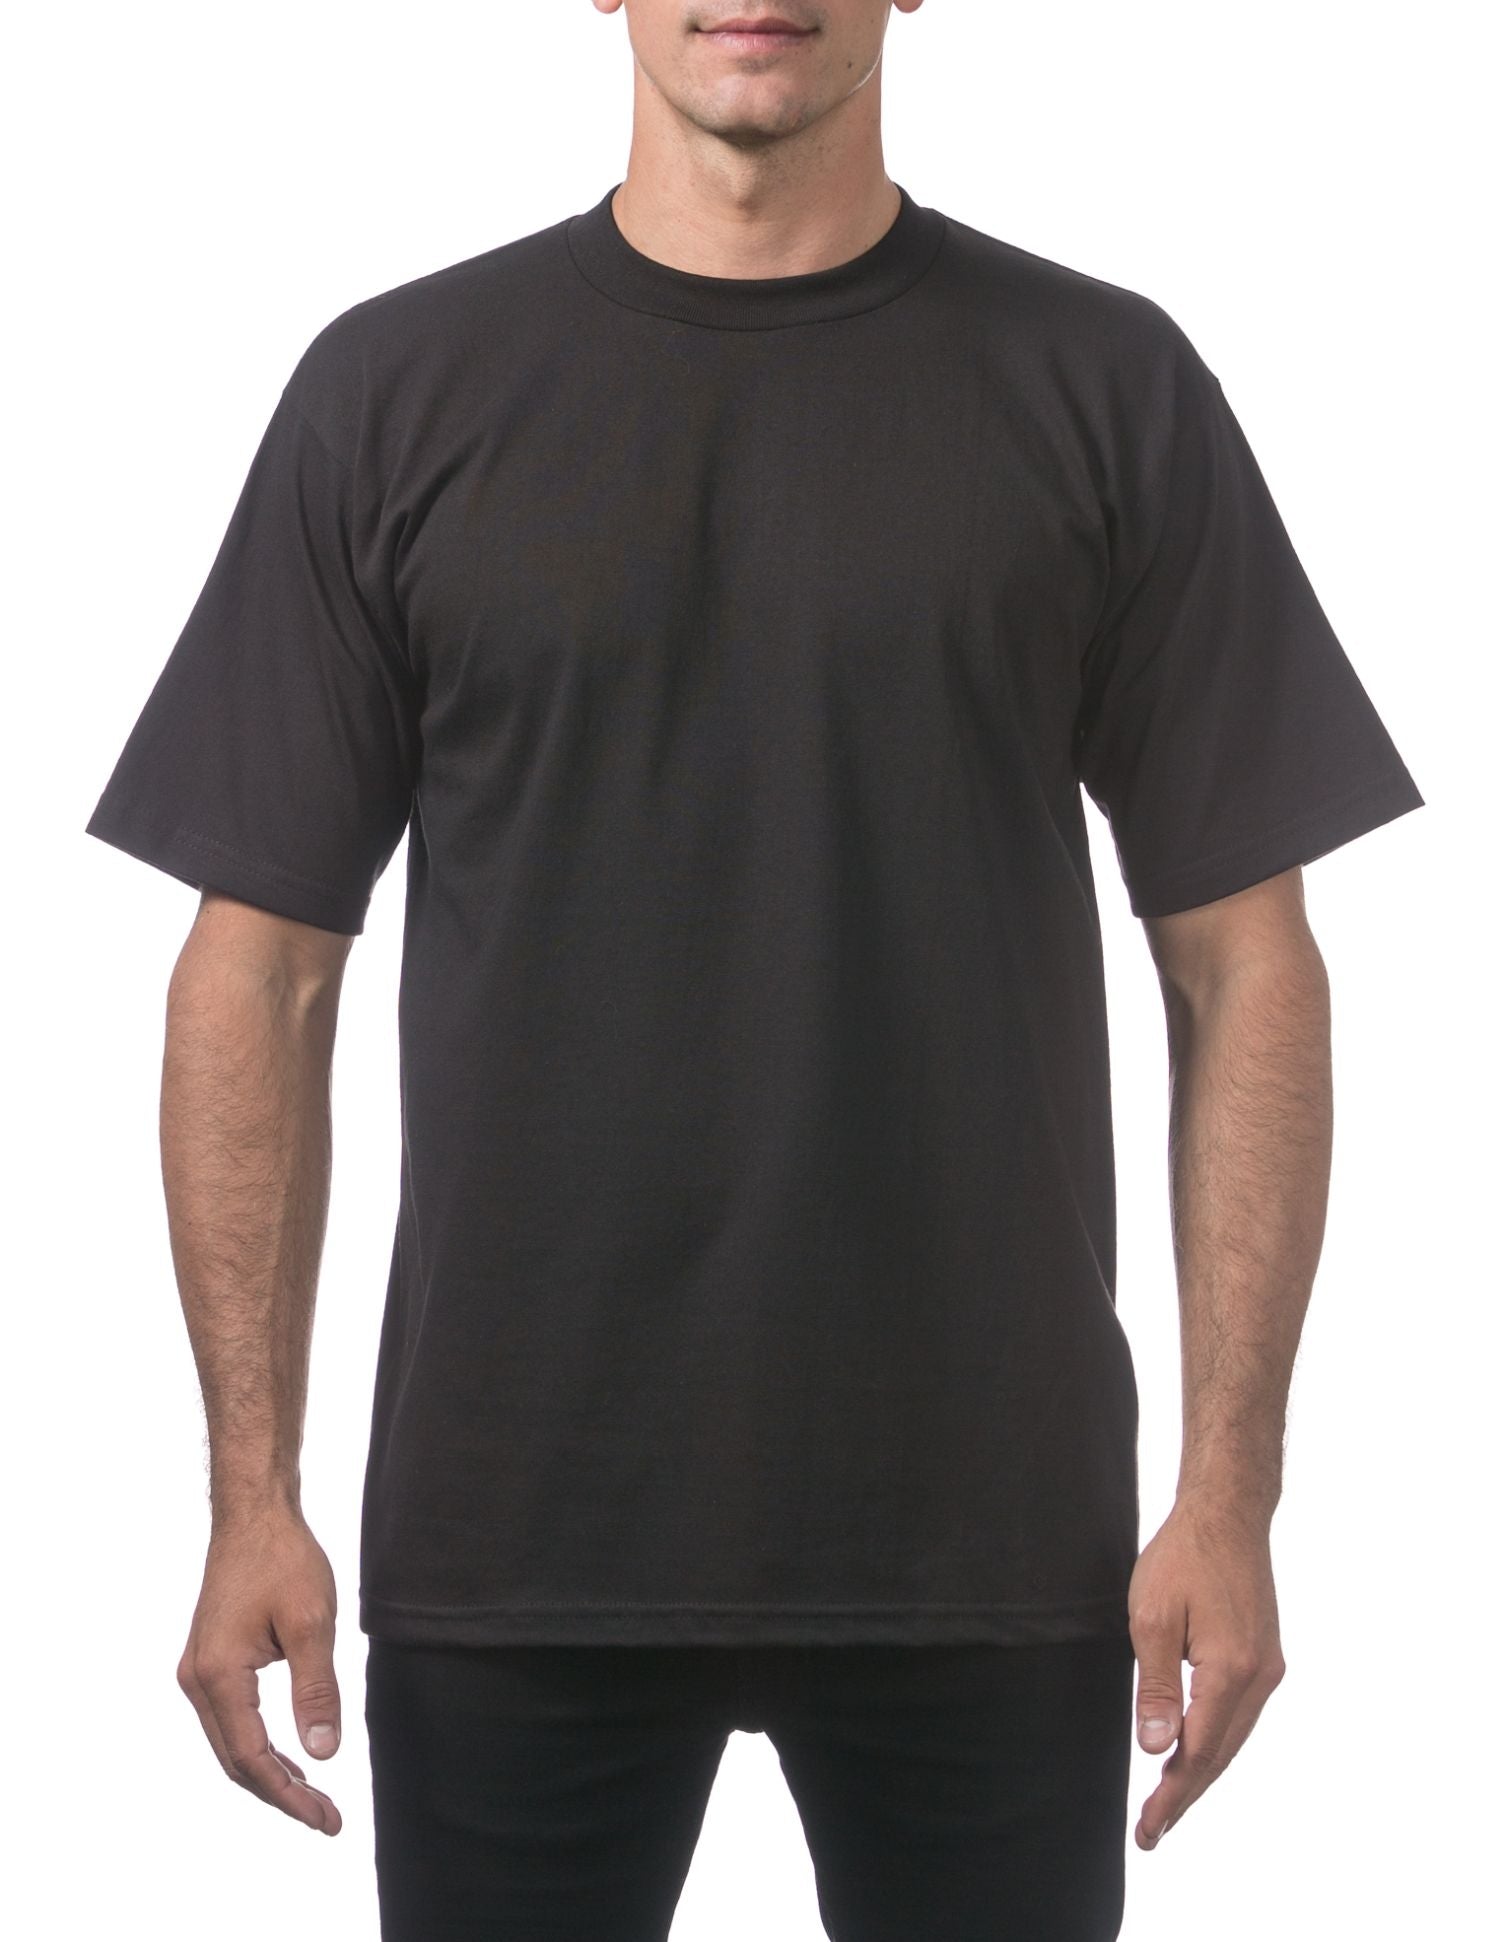 Pro Club Men's Heavyweight Short Sleeve Tee T-Shirt - Black - Large - Pro-Distributing